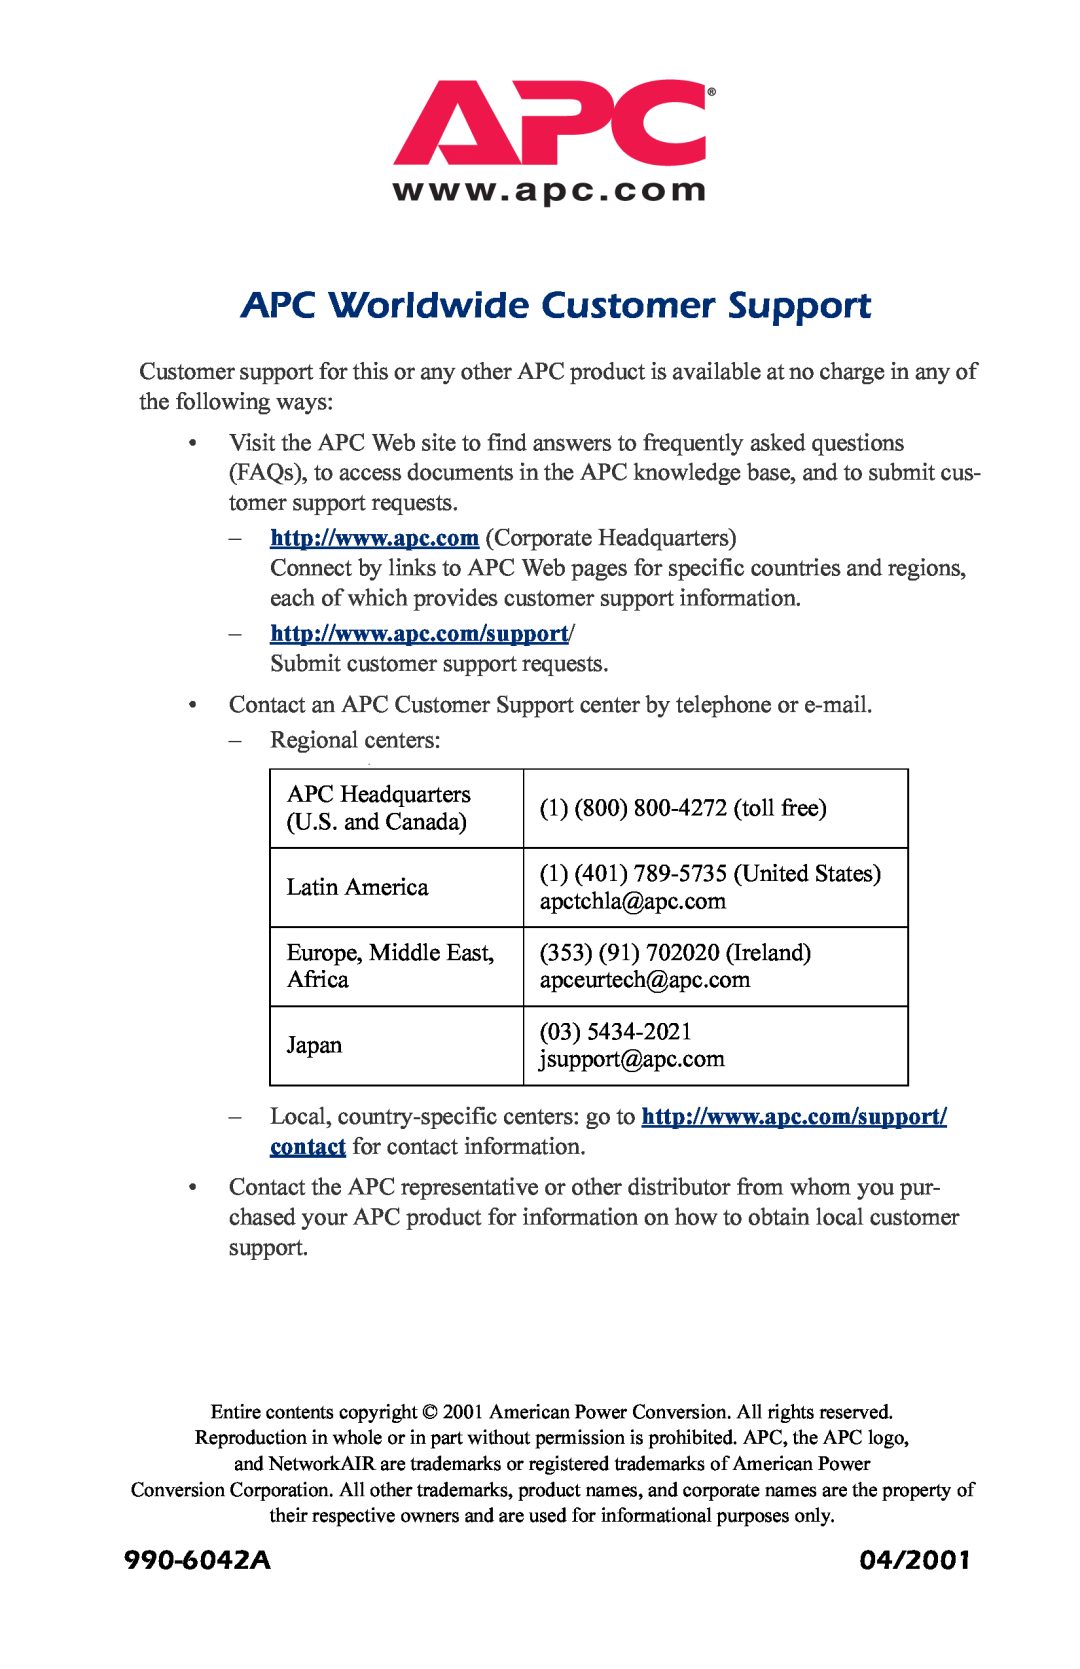 APC AP7004, AP7003 user manual APC Worldwide Customer Support, 990-6042A, 04/2001 